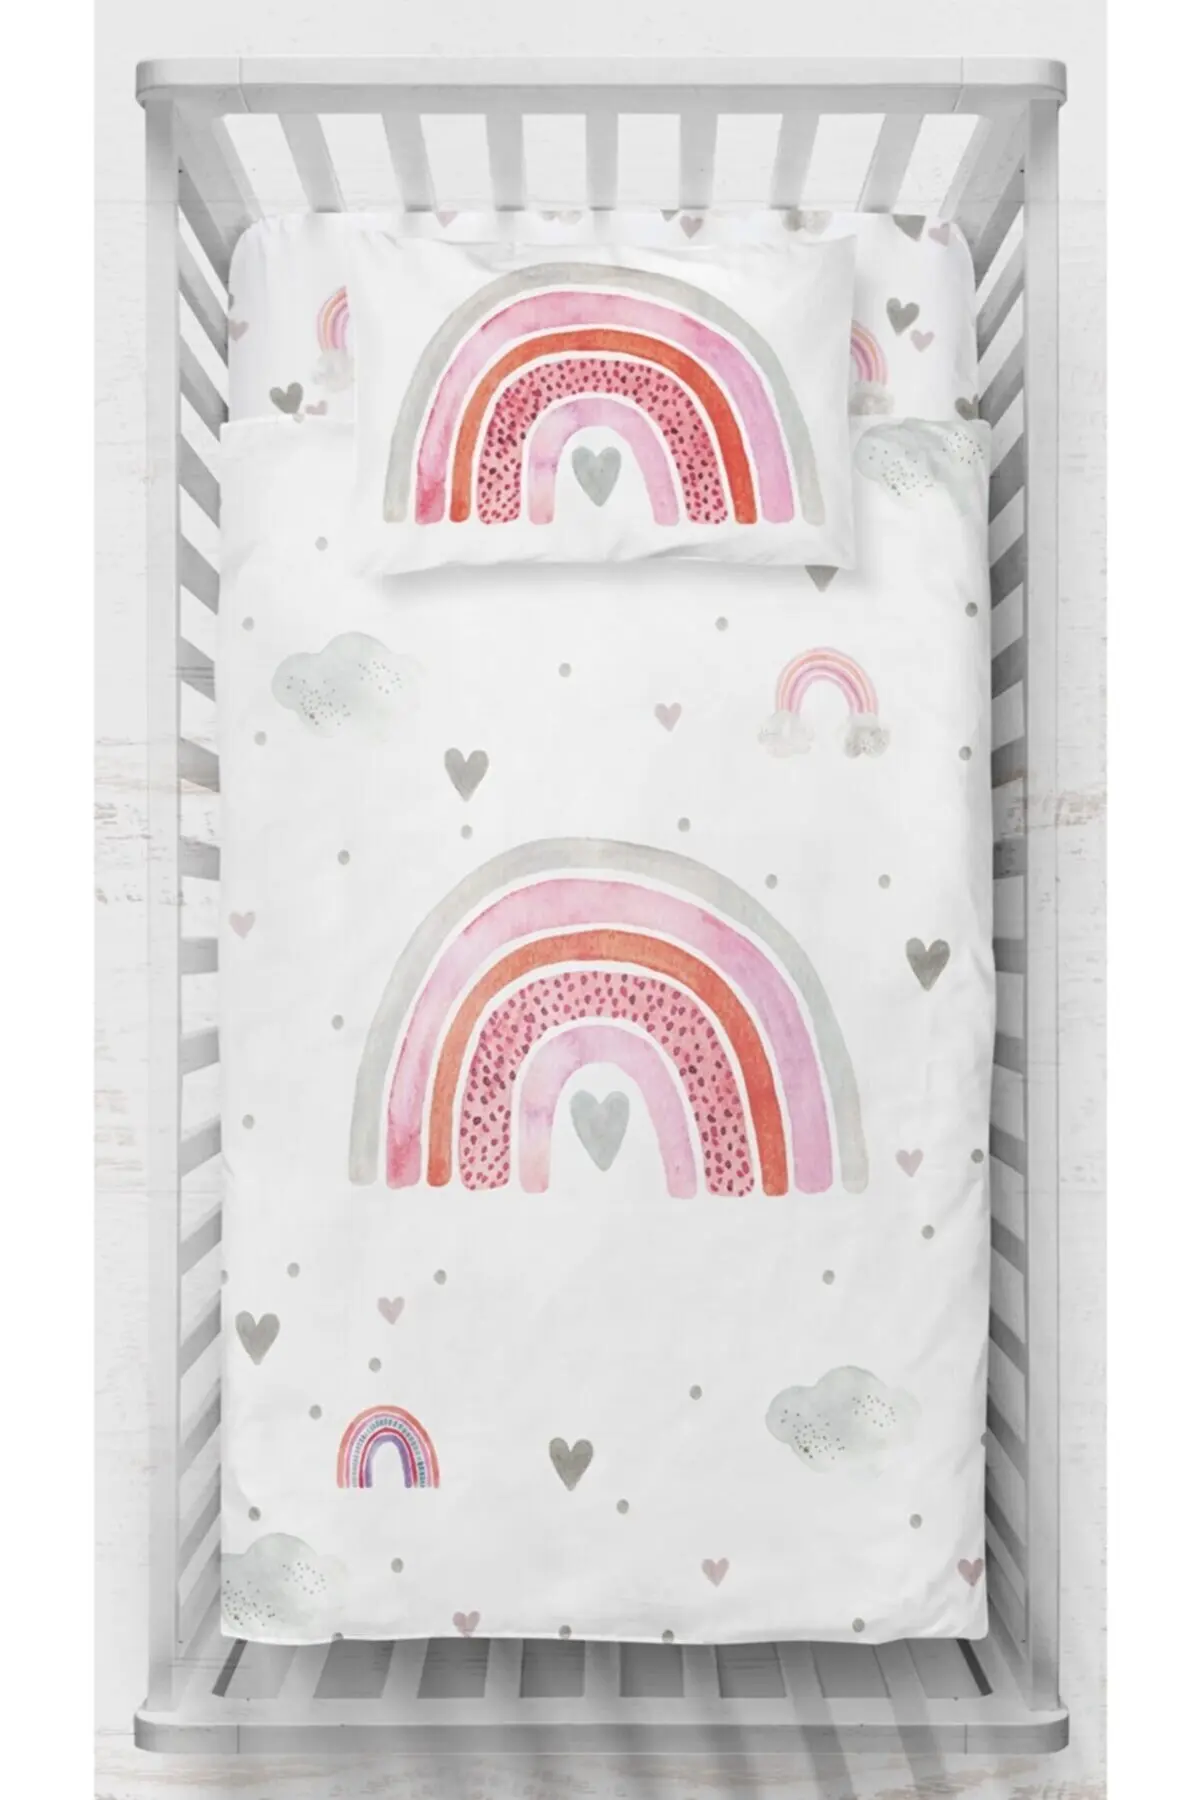 3Pcs/Set Satin Baby Bedding Set Cartoon Animal Print Baby Crib Bed For Newborns Infant Bedding Set 100% Soft Comfortable Rainbow